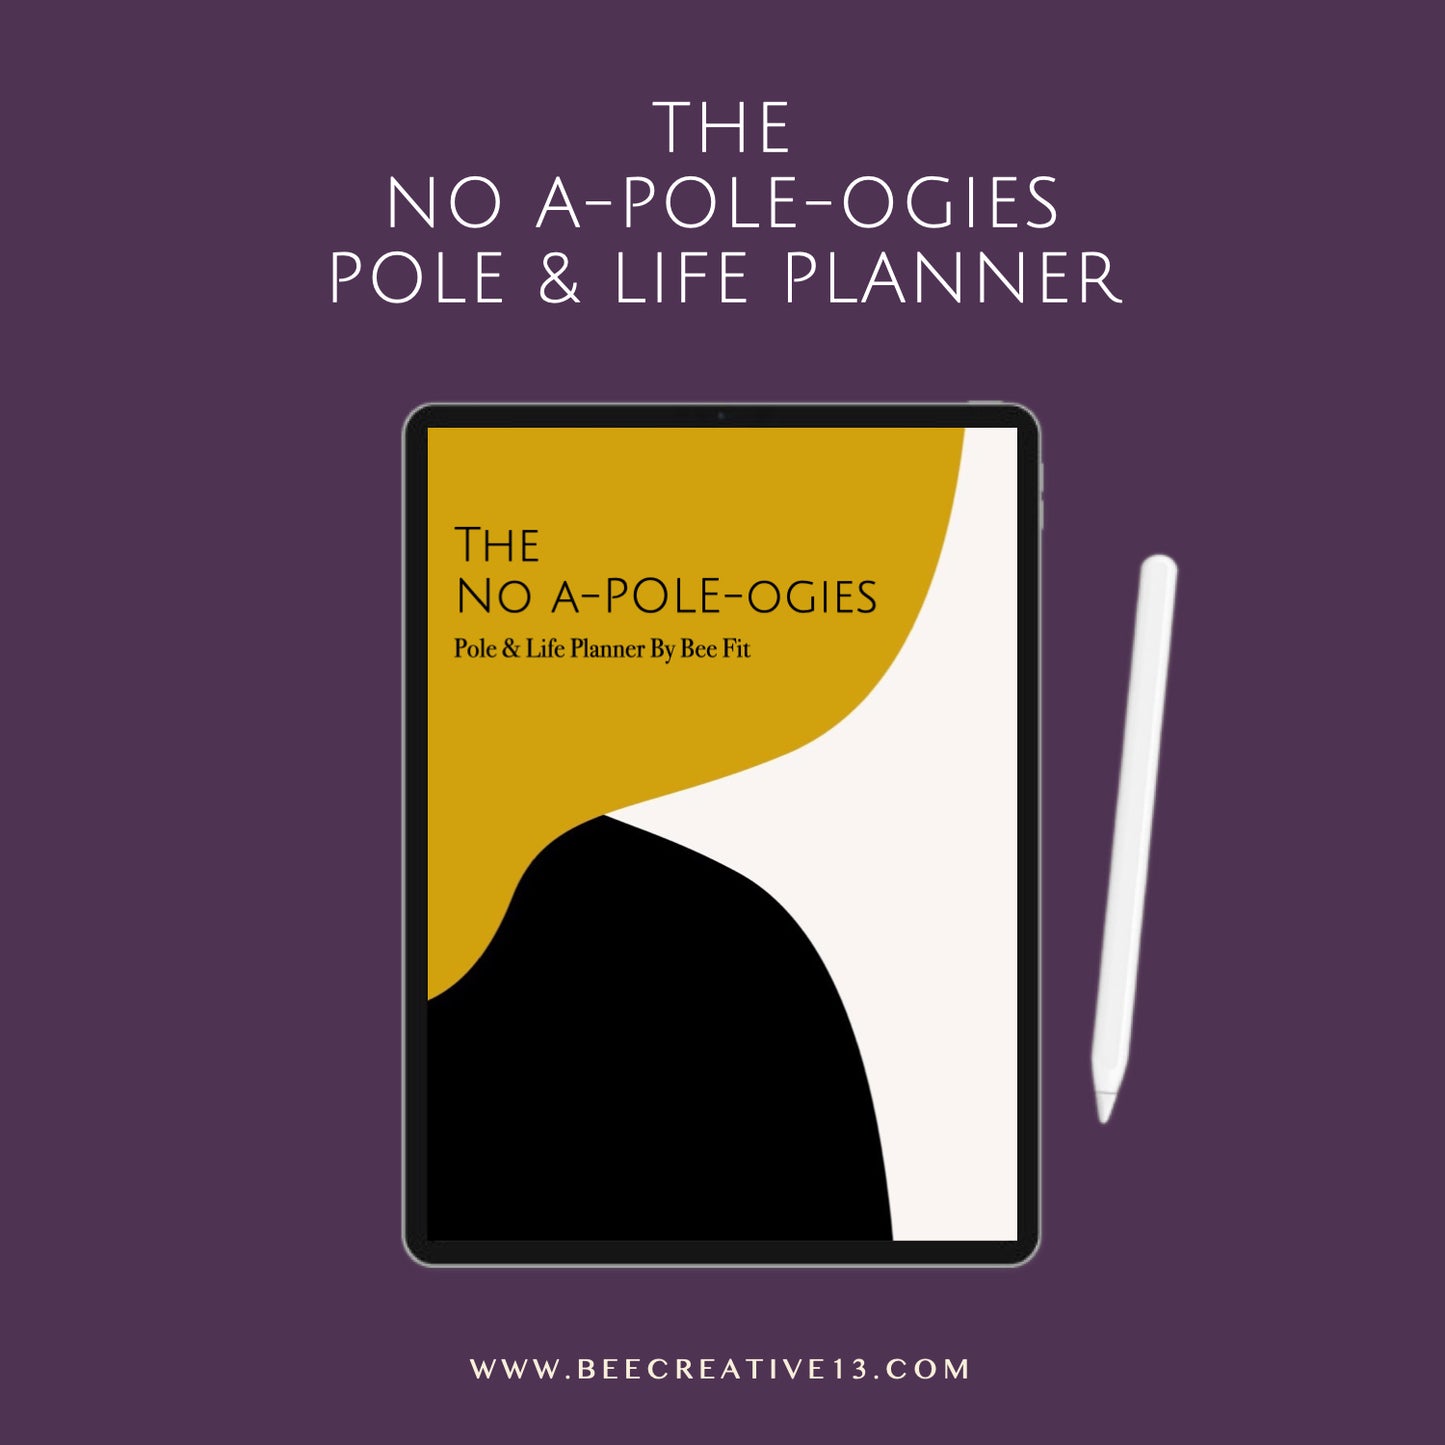 THE NO A-POLE-OGIES POLE & LIFE PLANNER